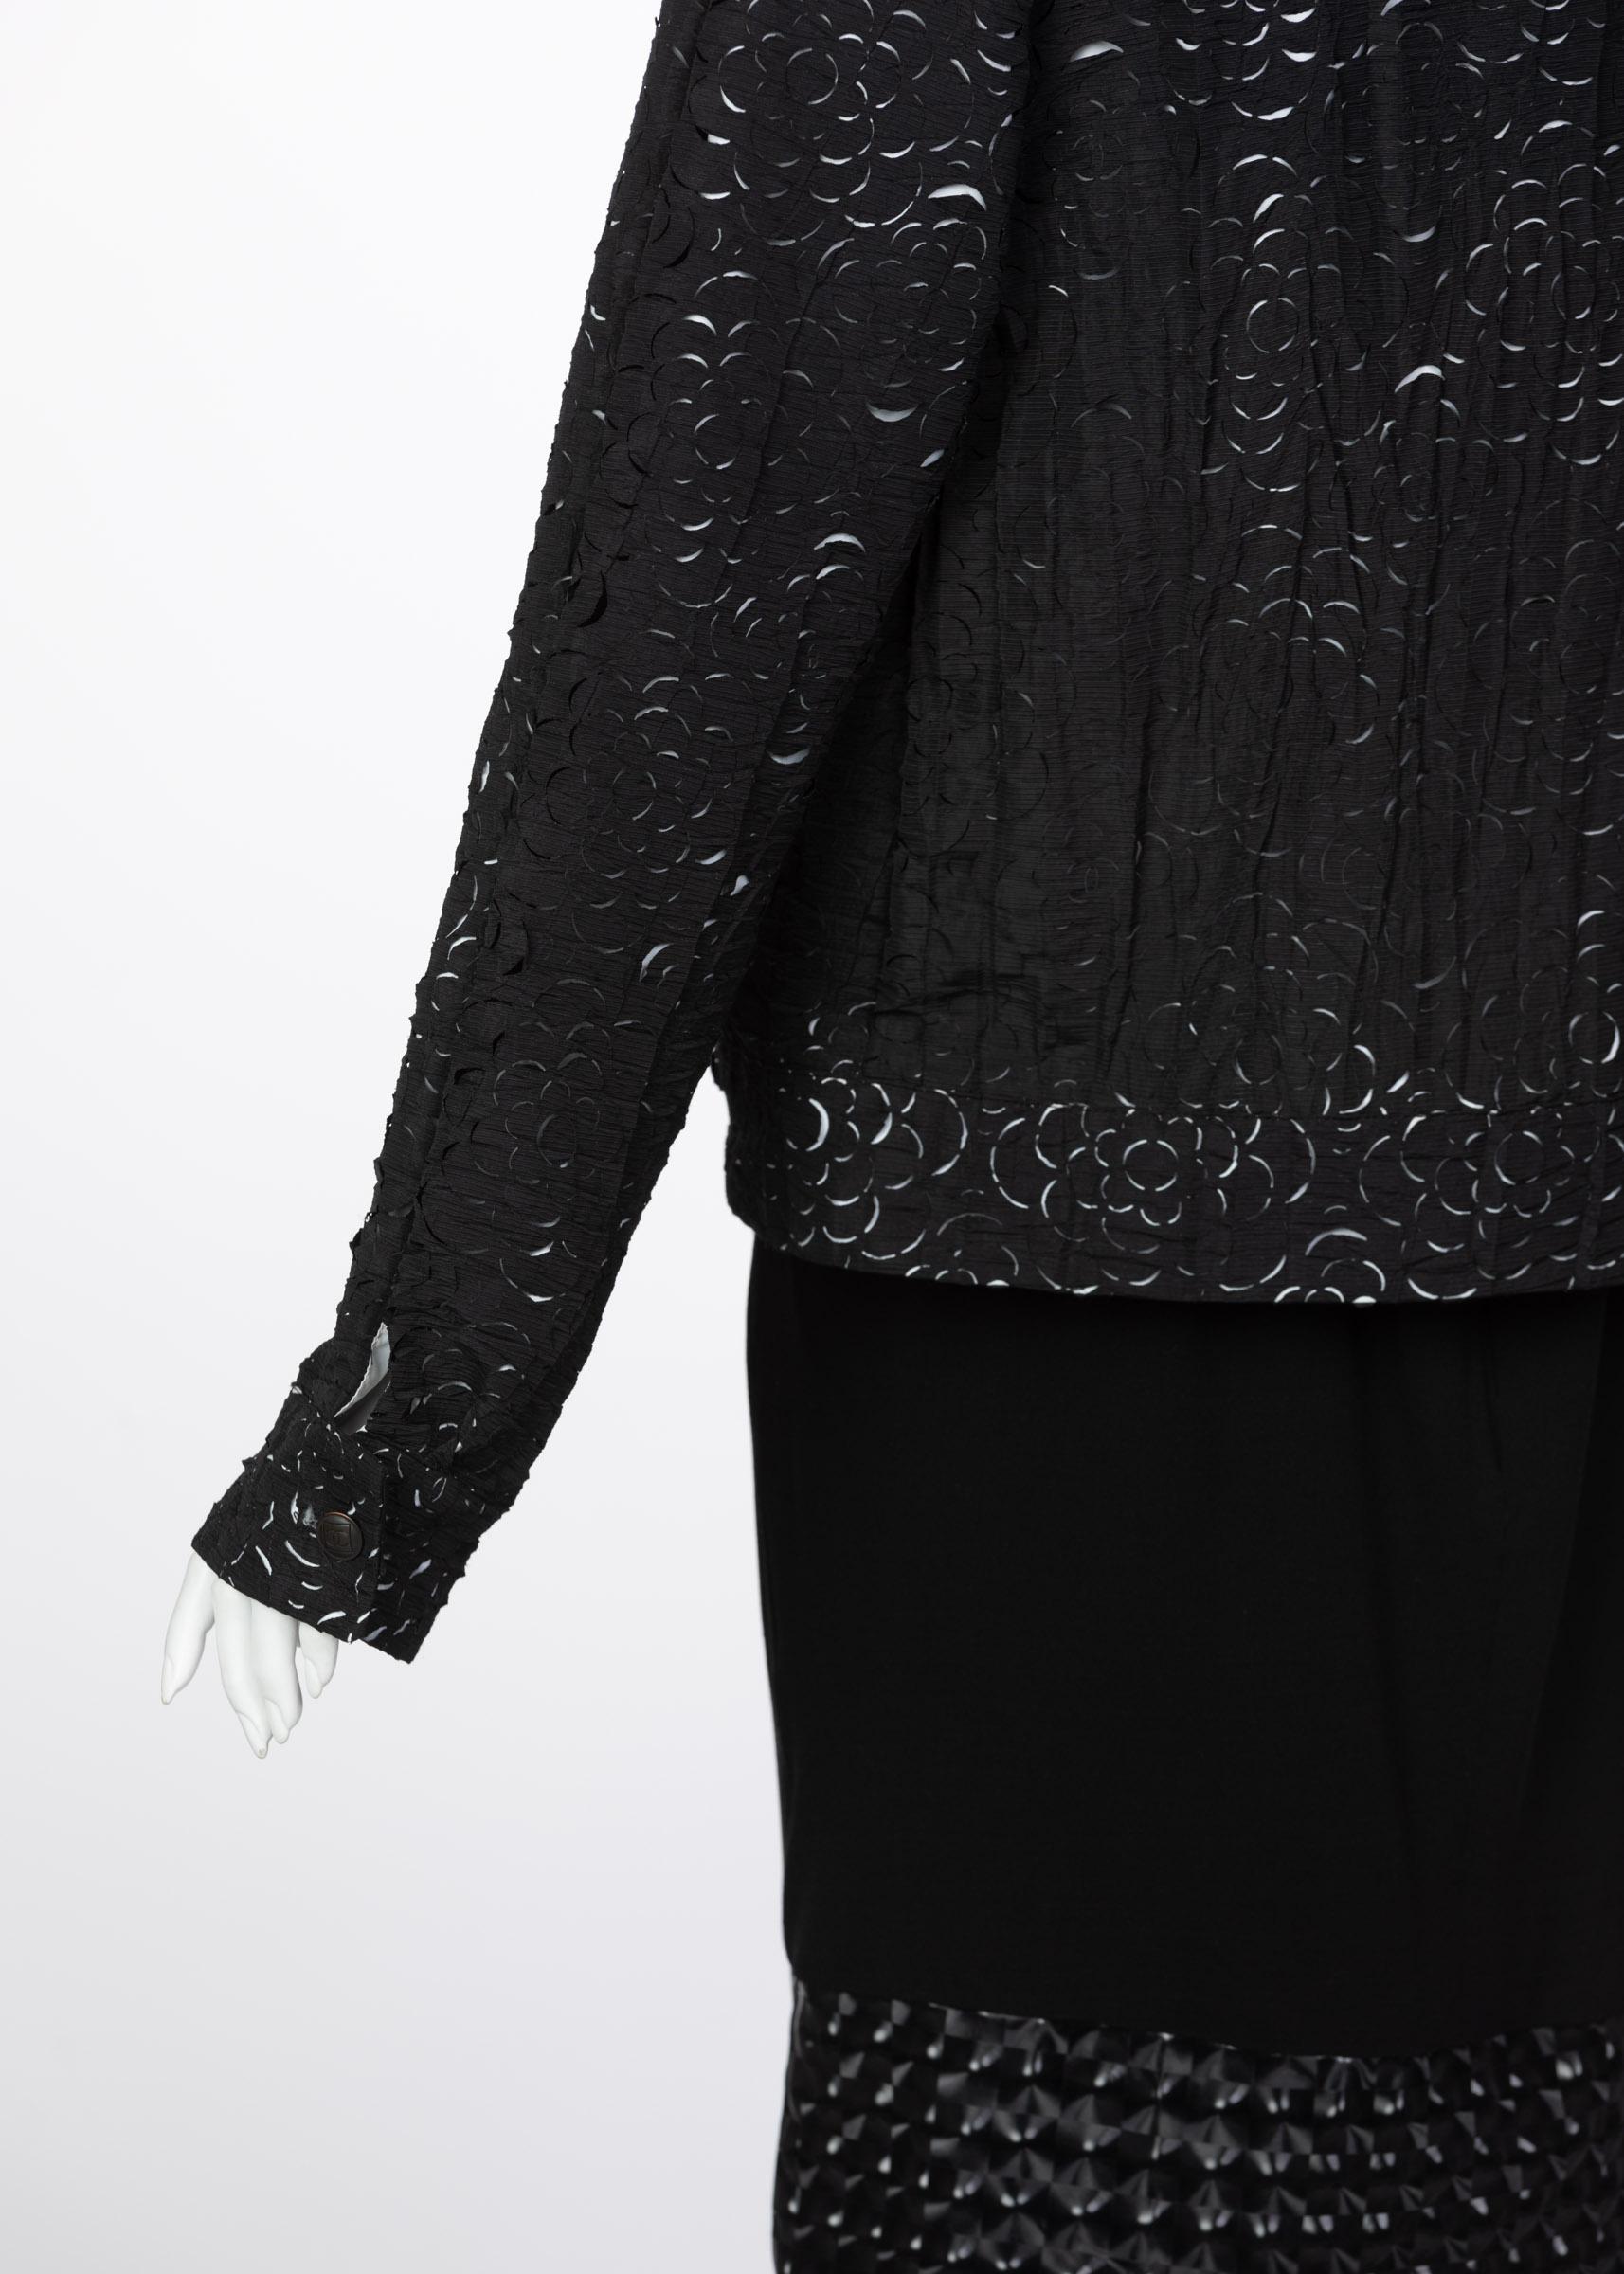 Chanel Sleeveless Black Cocktail Dress Camellia Laser Cut Bomber Jacket Set, 9